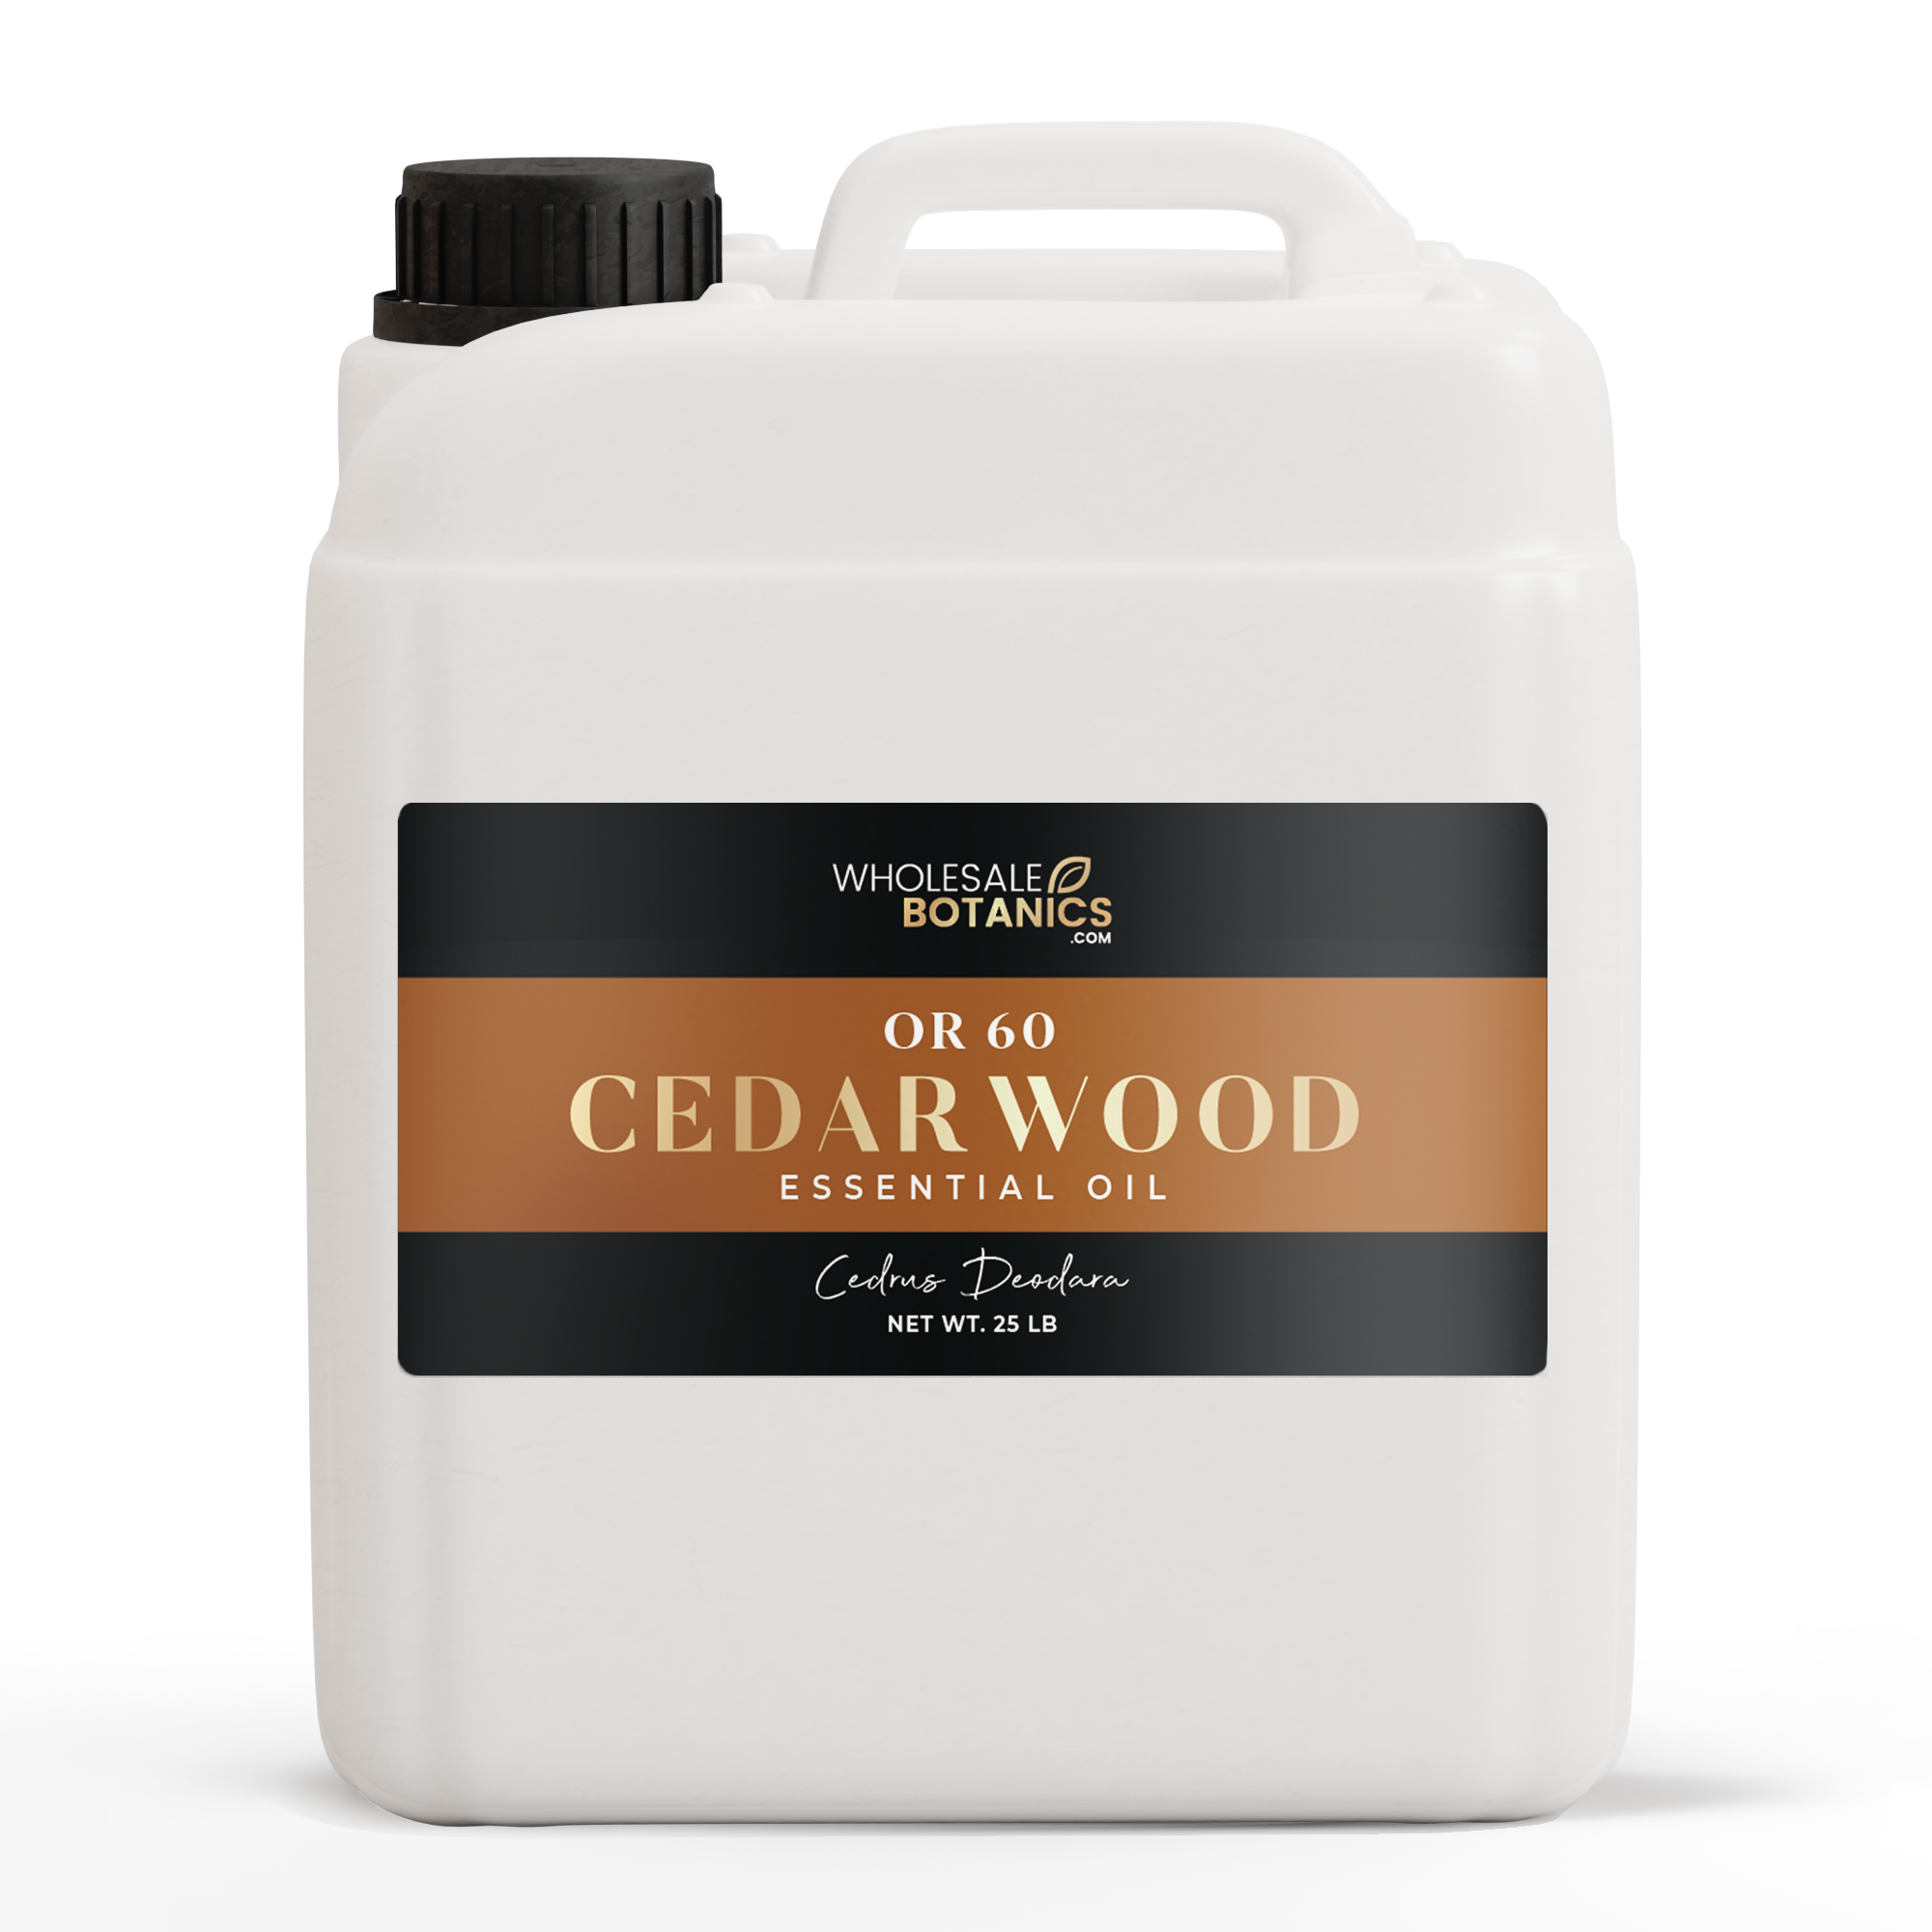 Cedarwood Essential Oil - Botanical Cedarwood (OR 60) - 25 lbs